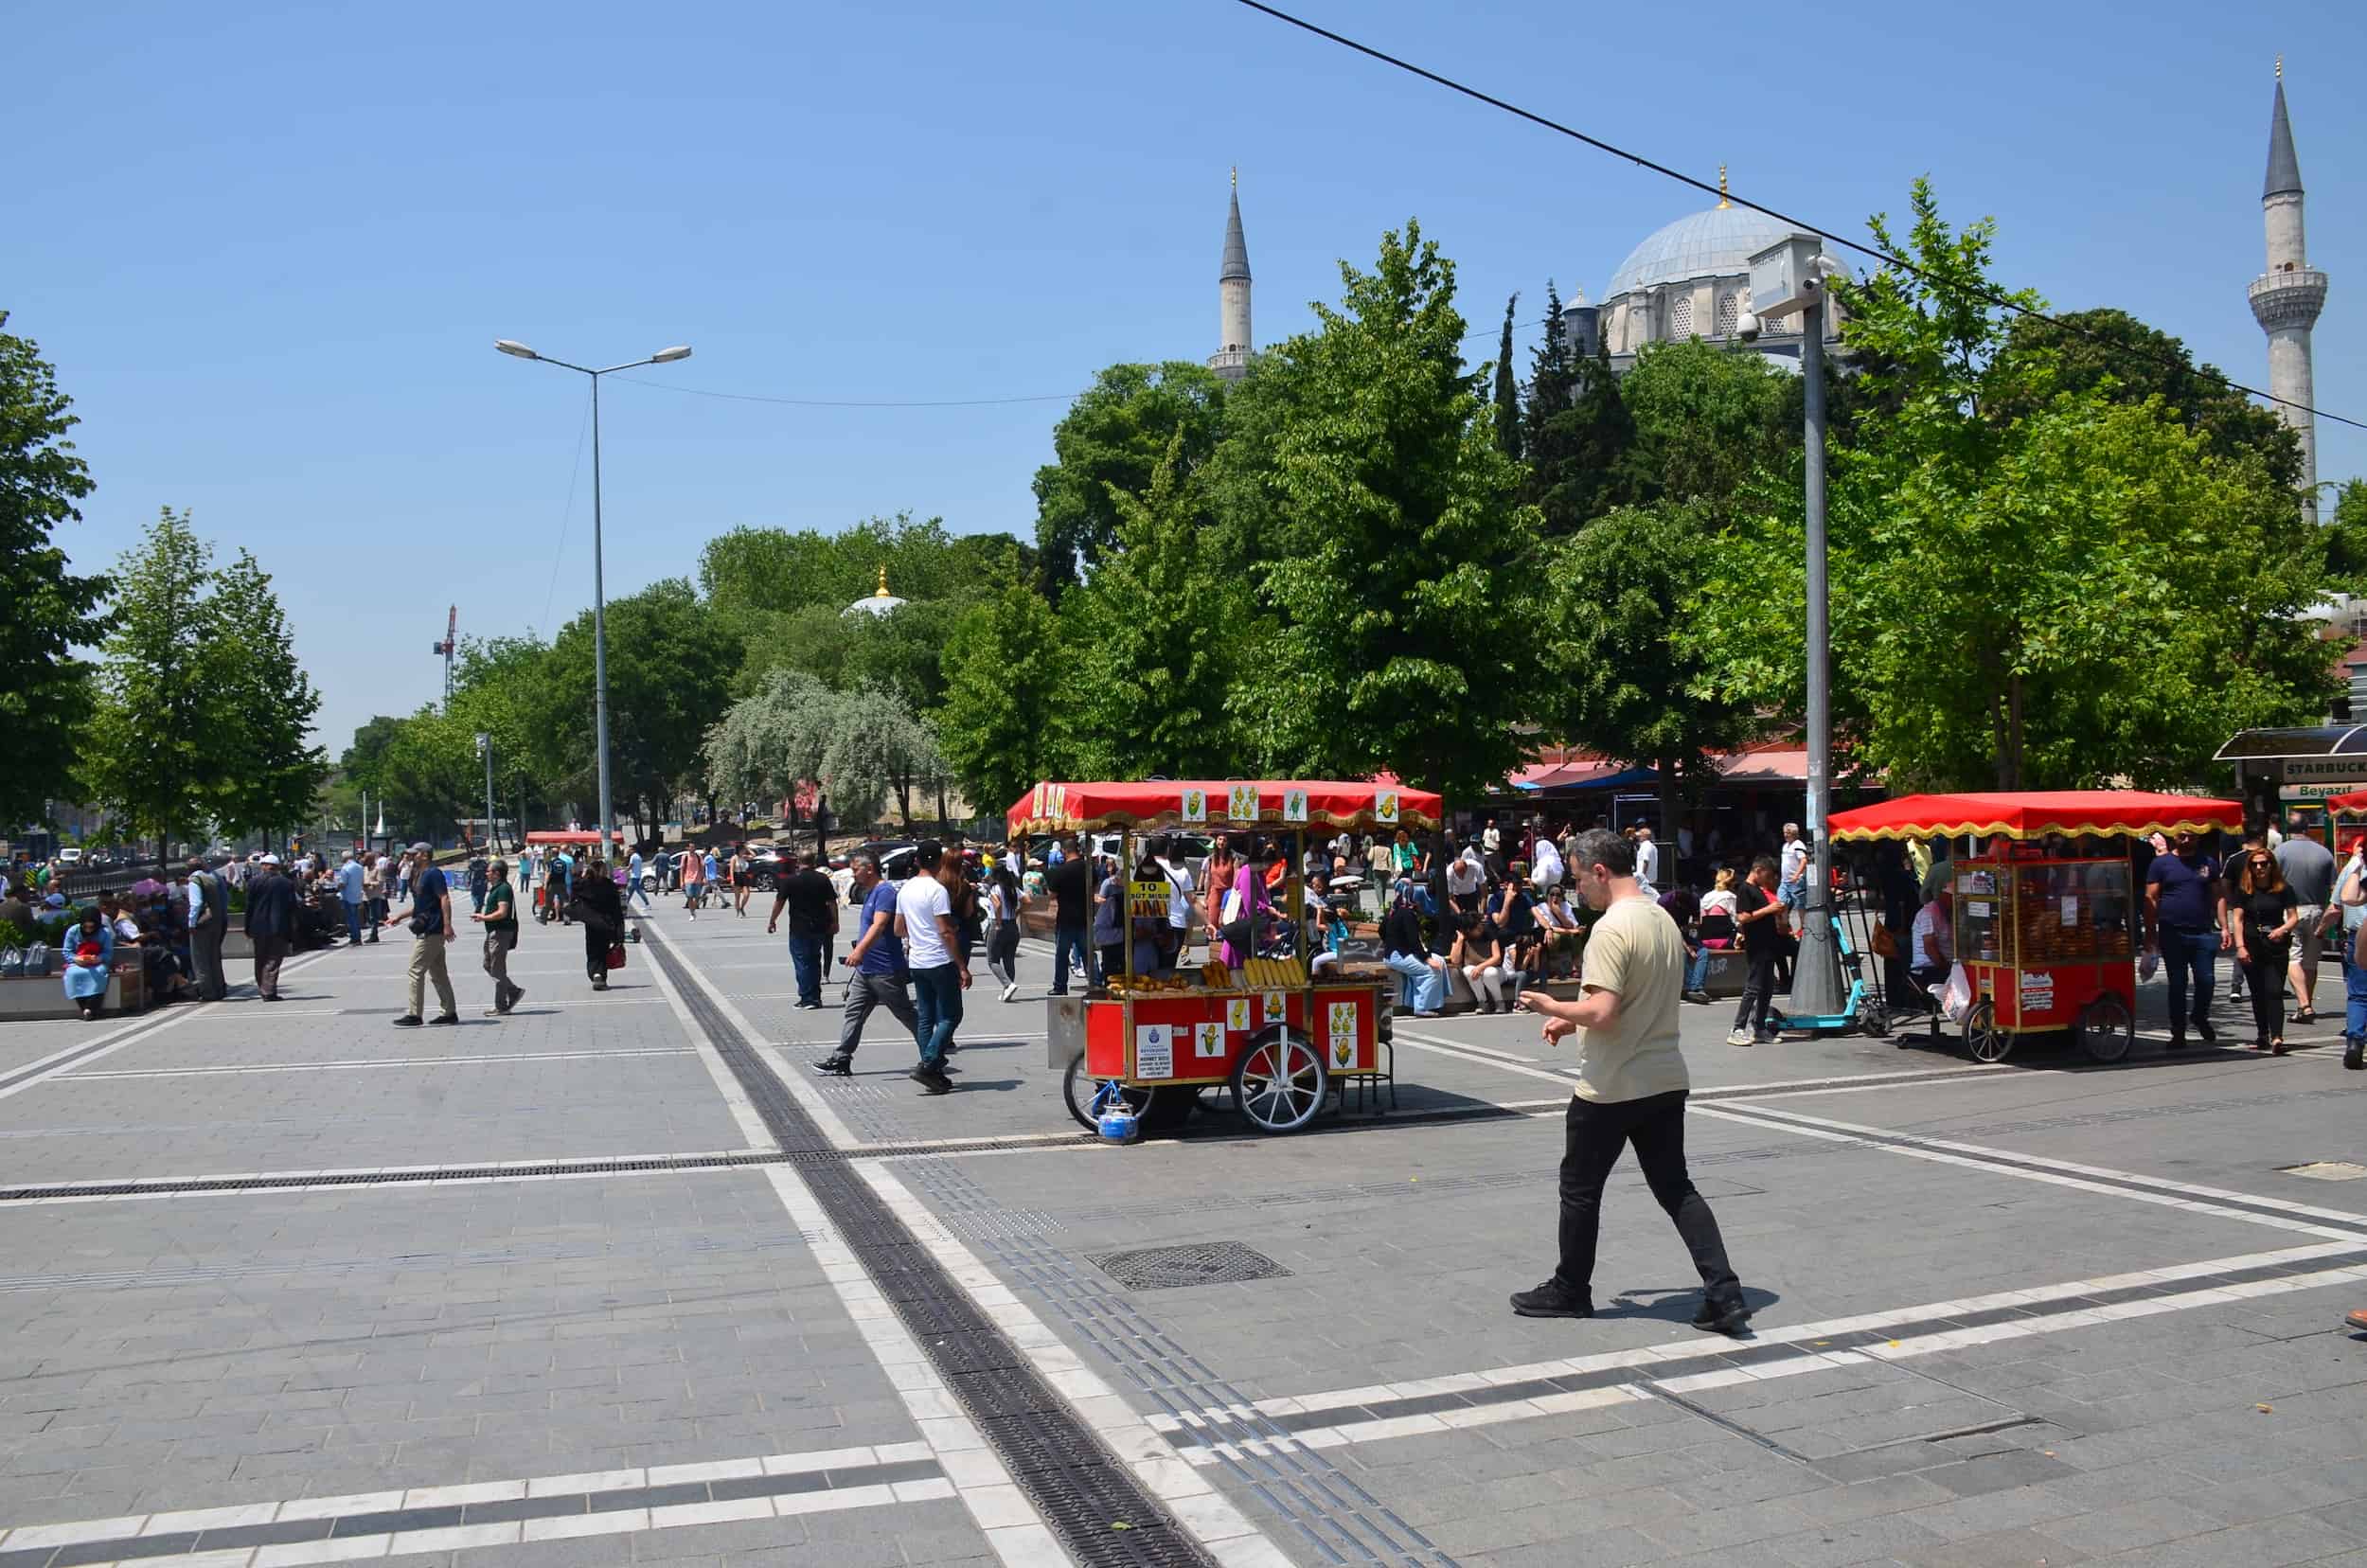 Beyazıt Square in Beyazıt, Istanbul, Turkey